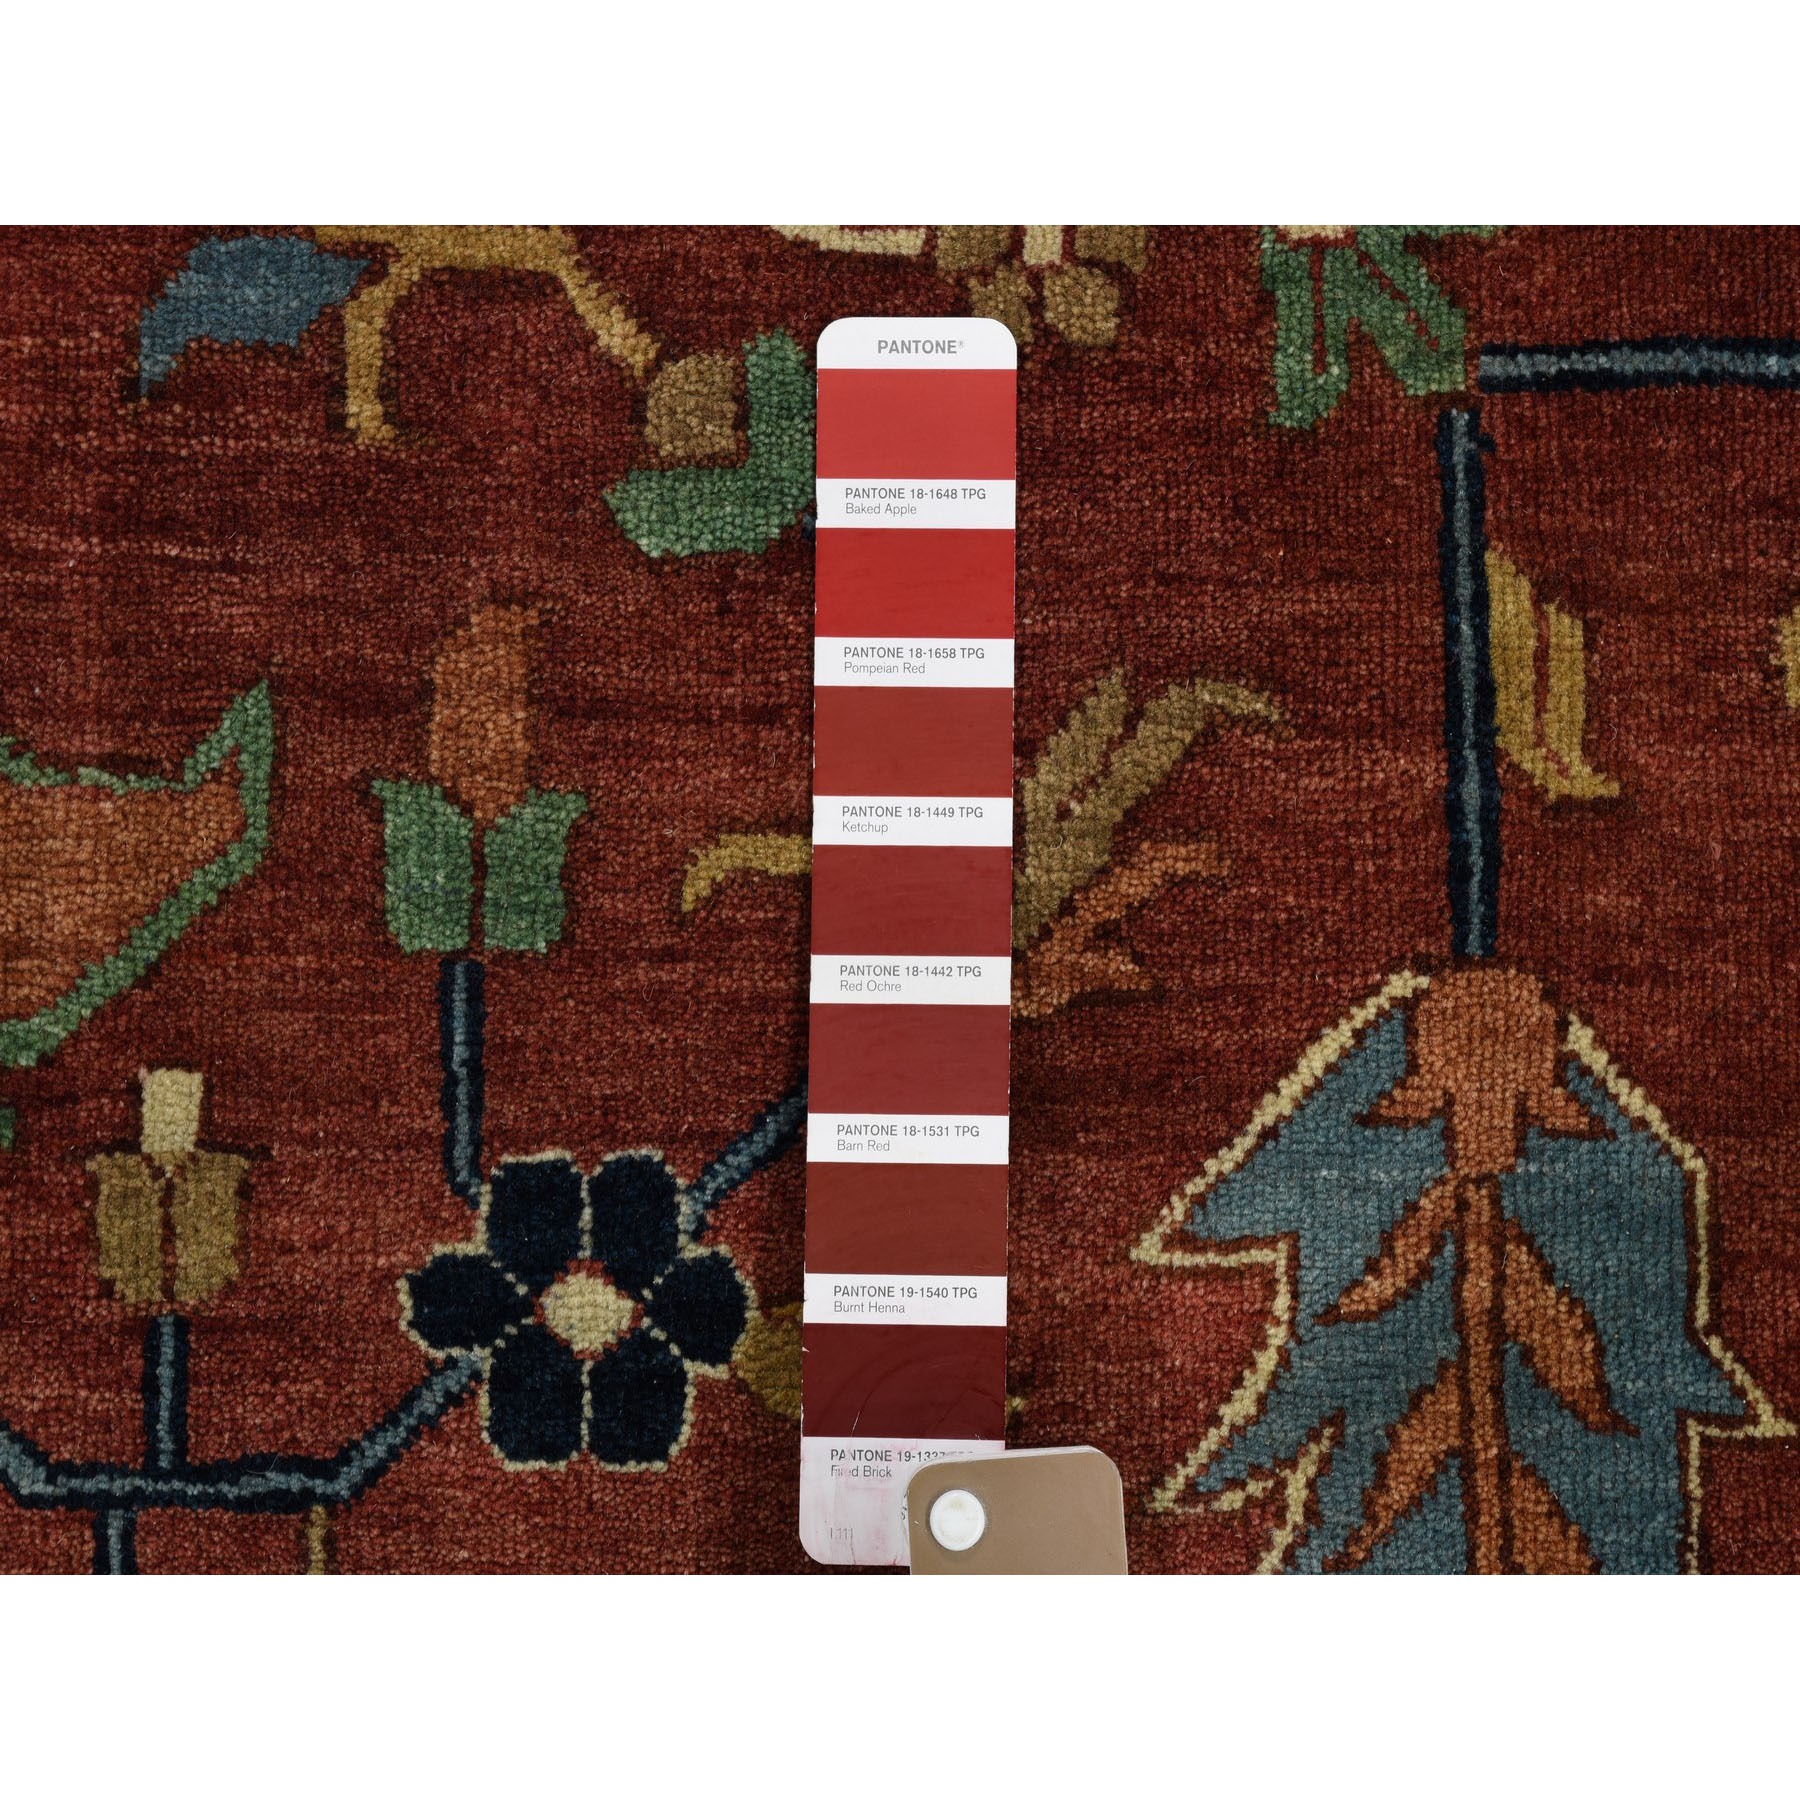 12'x17'9" Oversize Hand Woven Antiqued Heriz Re-creation Pure Wool Oriental Rug 